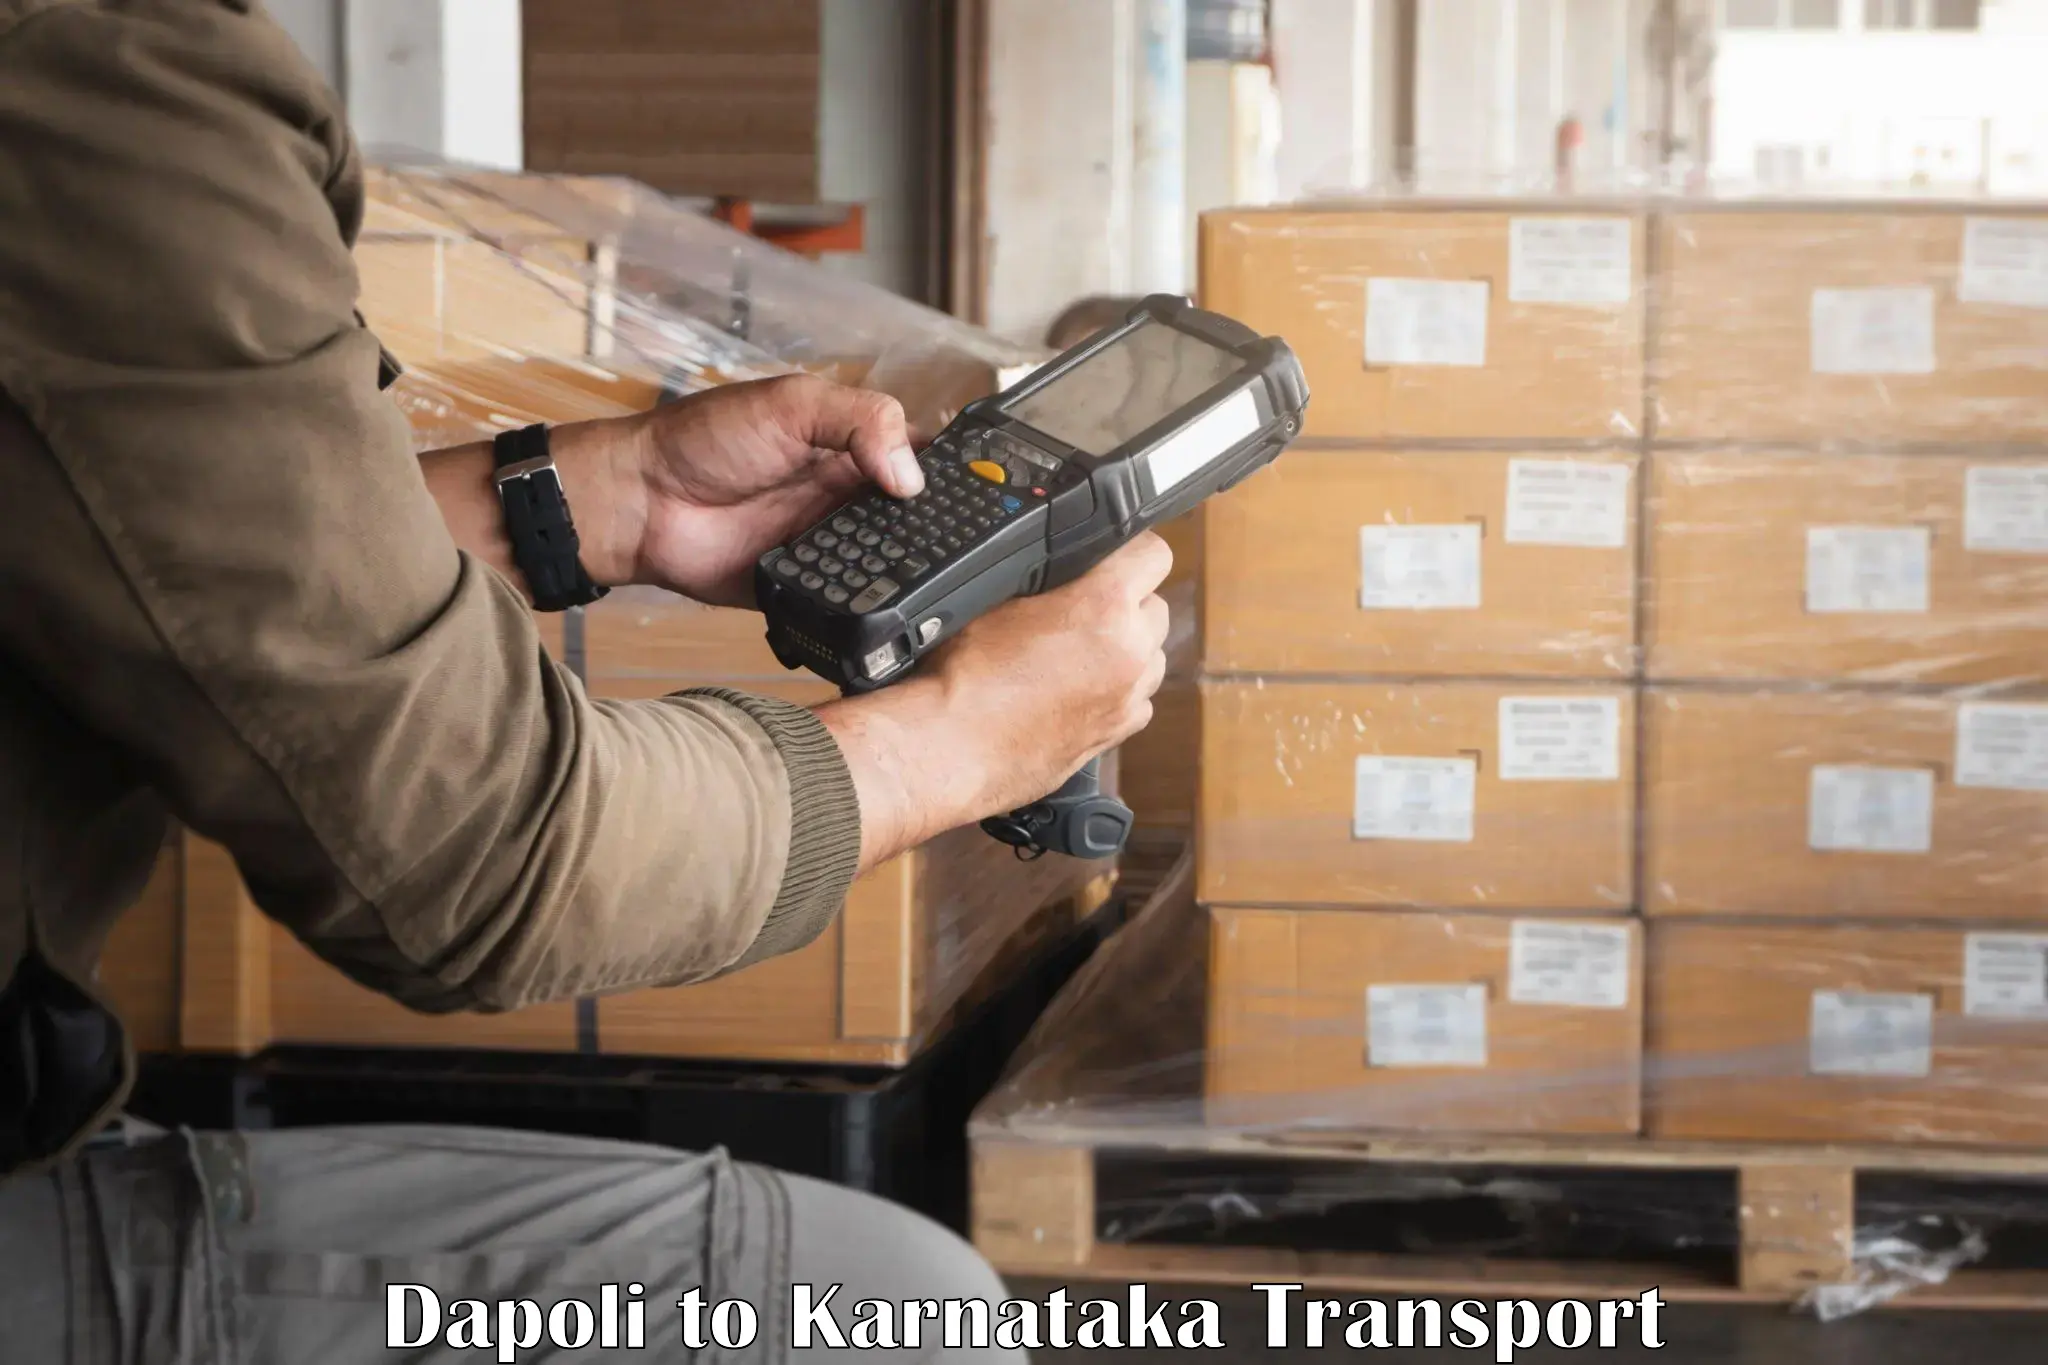 Container transport service Dapoli to Mannaekhelli